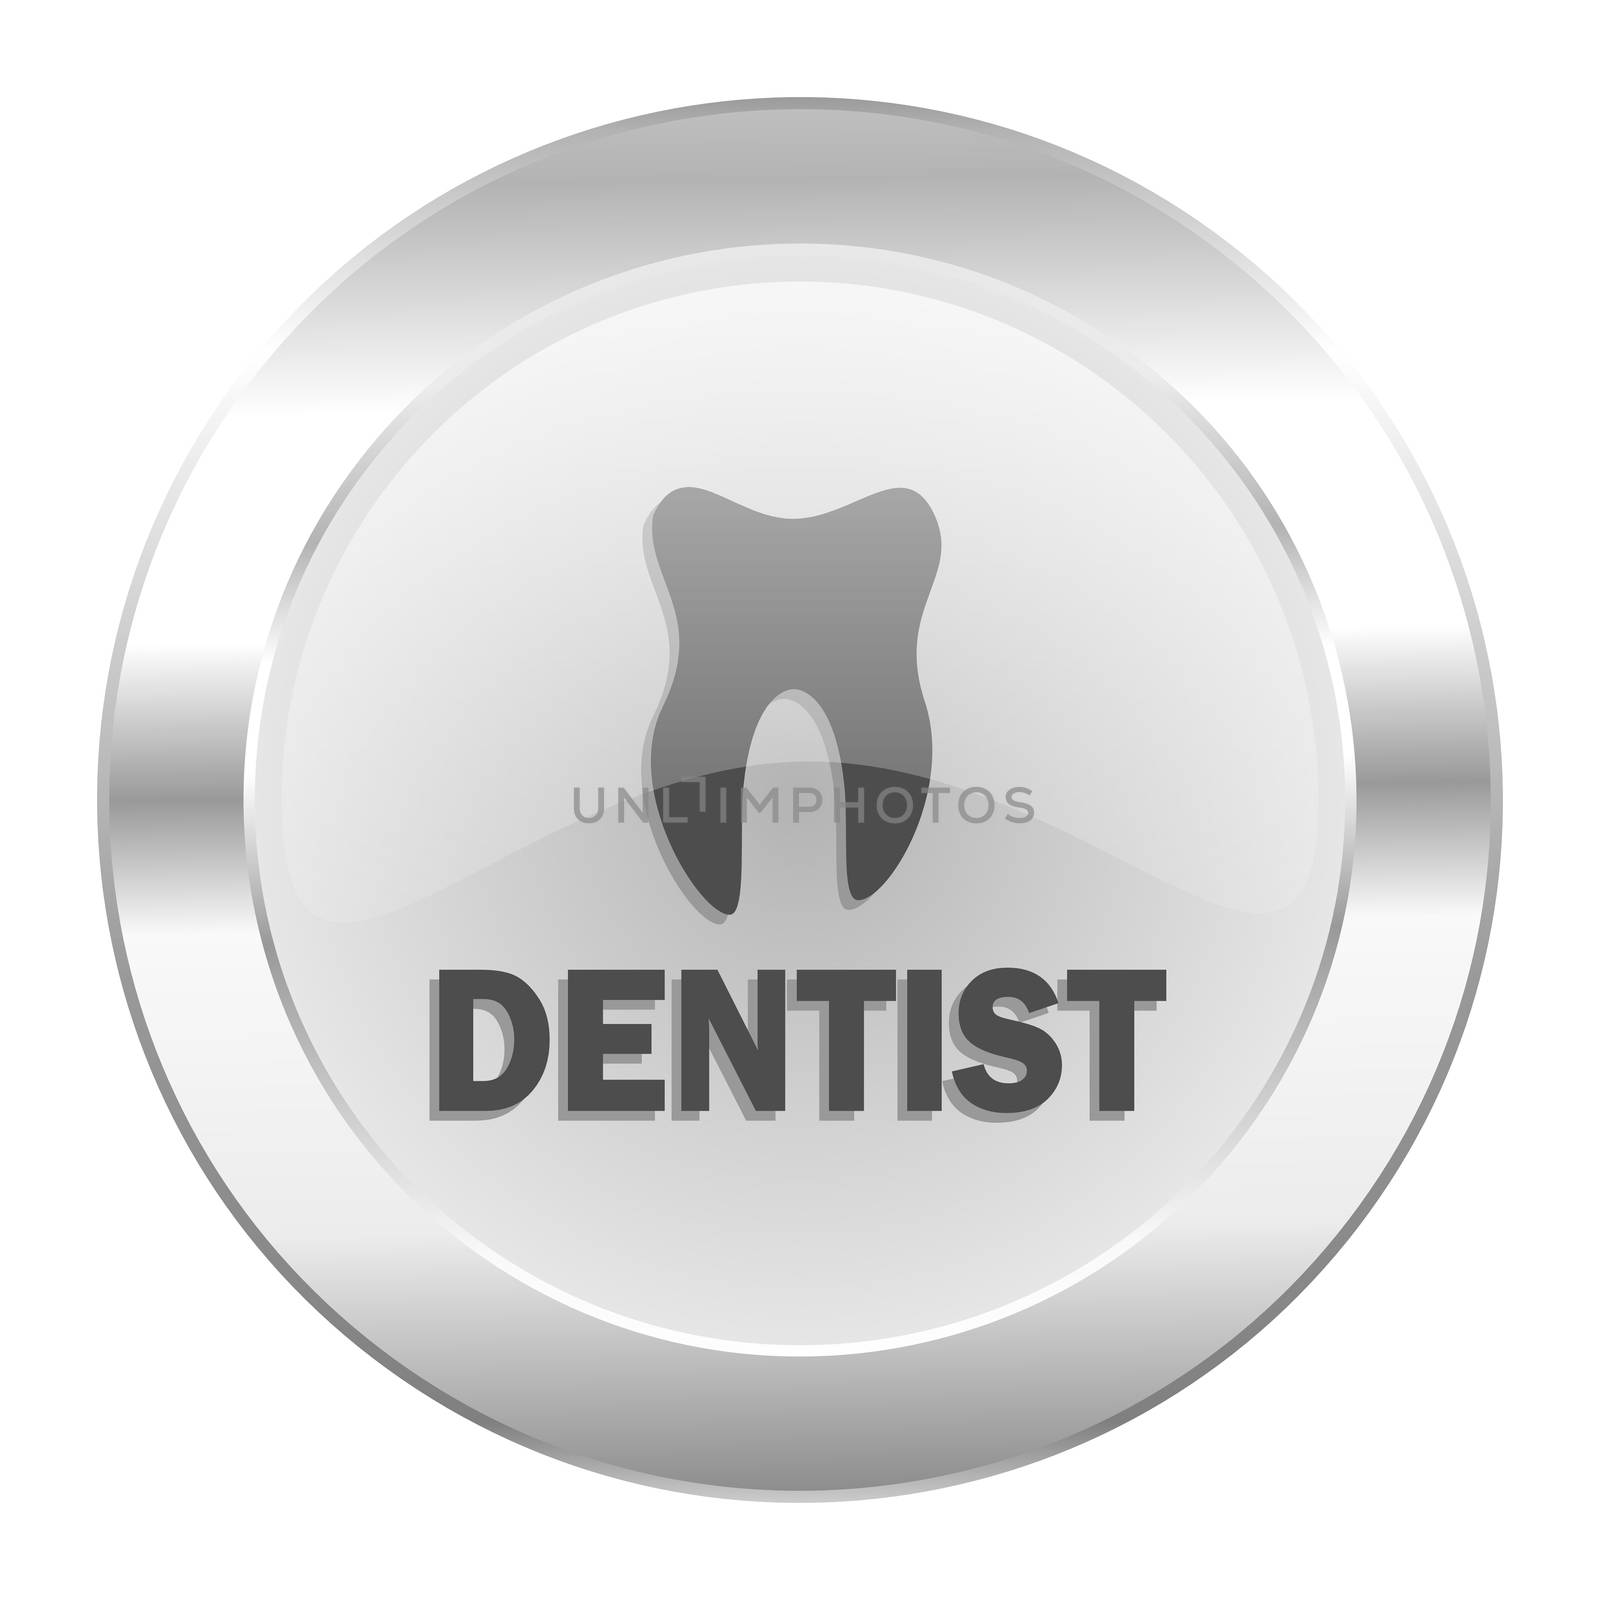 dentist chrome web icon isolated
